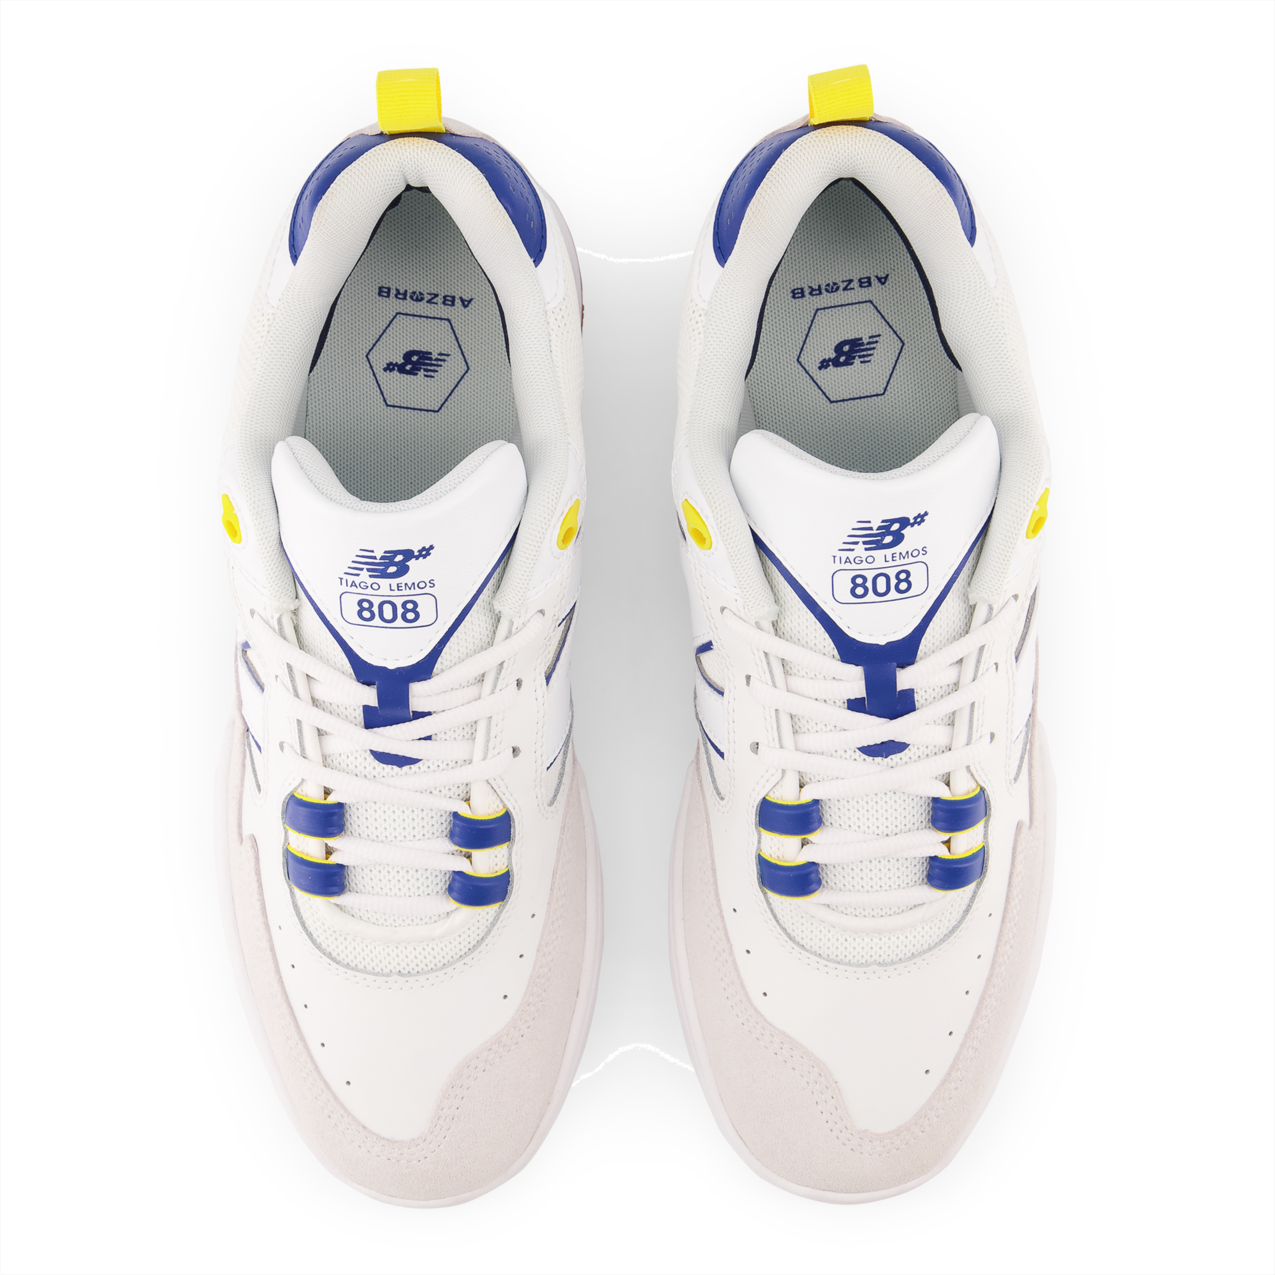 New Balance Numeric Men's Tiago Lemos 808 White Blue Shoes